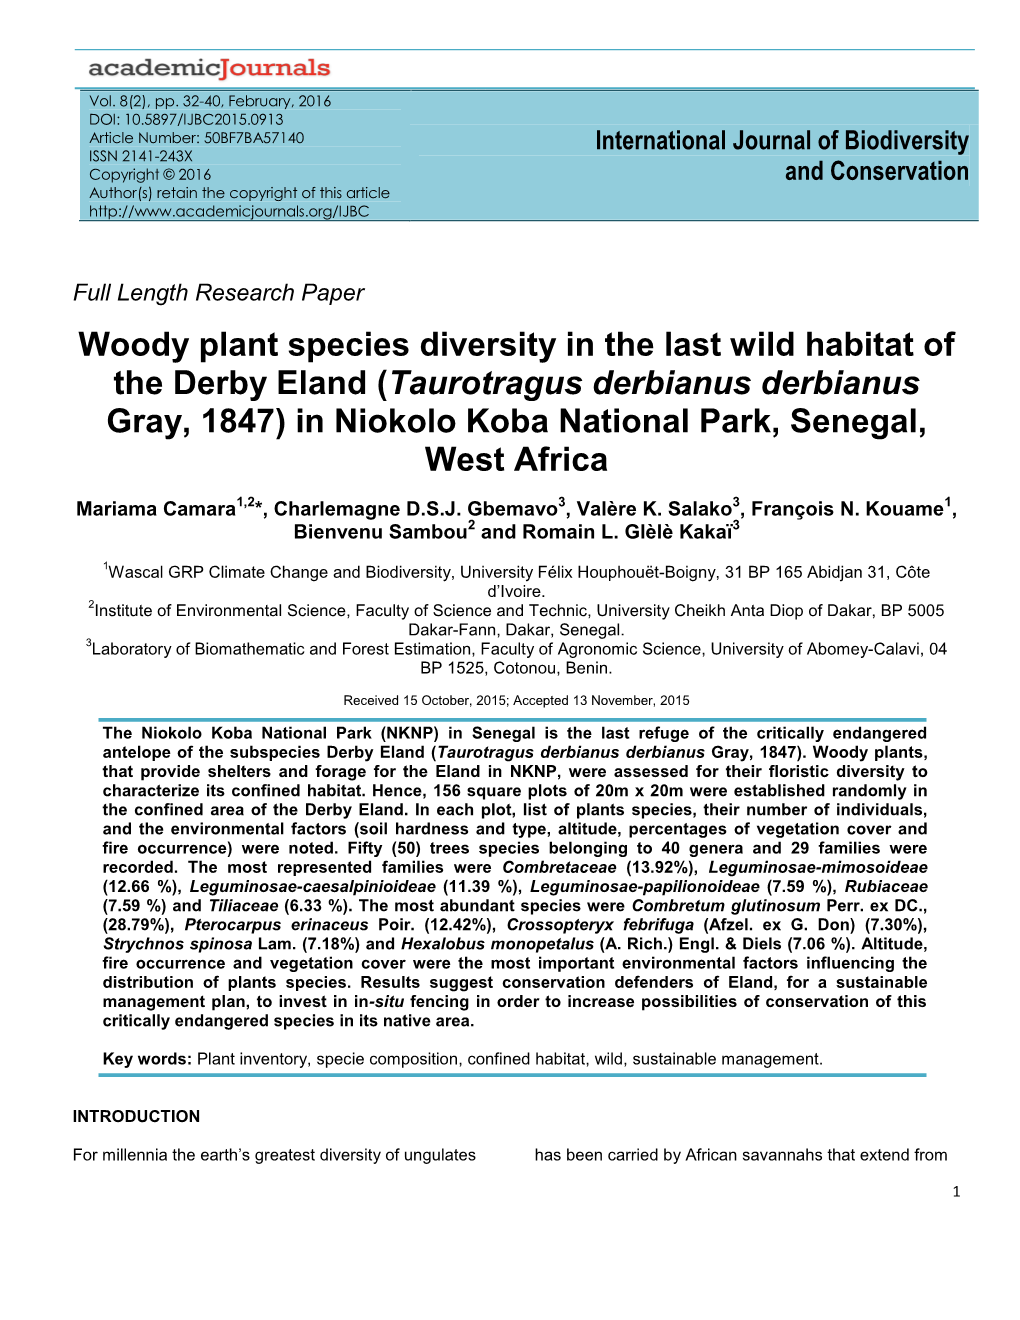 Woody Plant Species Diversity in the Last Wild Habitat of the Derby Eland